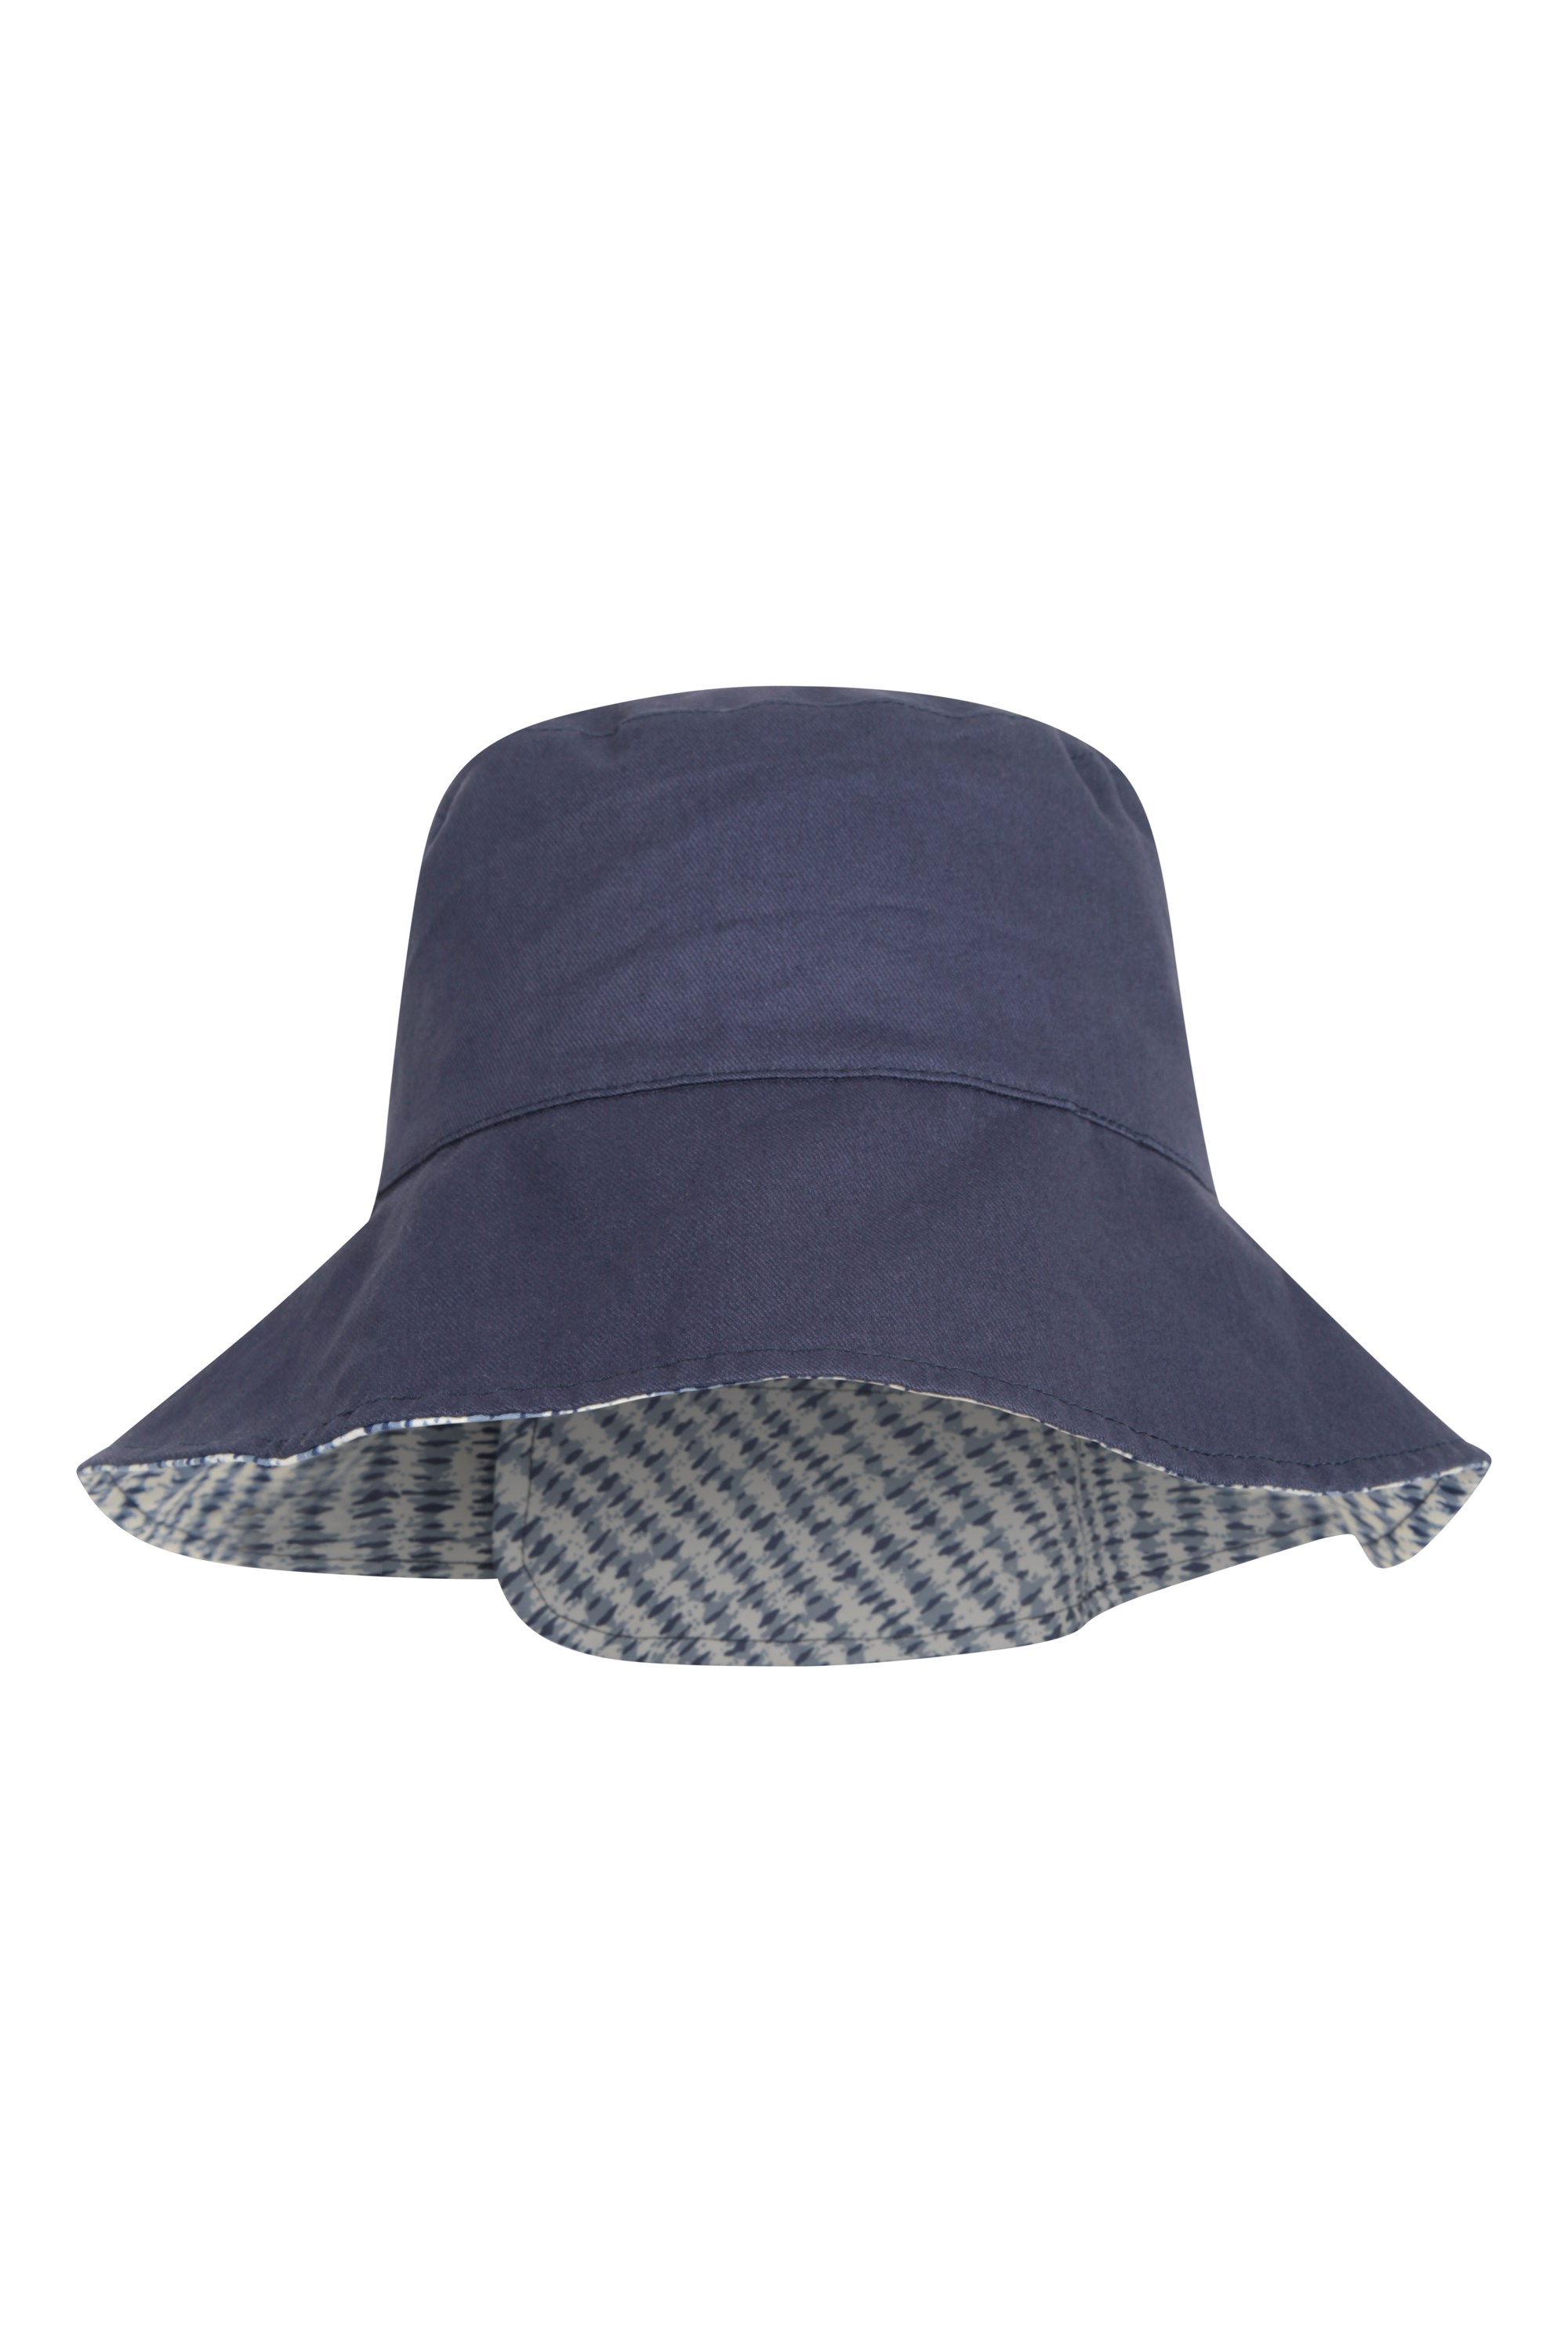 Mountain Warehouse Reversible Womens Printed Bucket Hat - Dark Blue | Size ONE